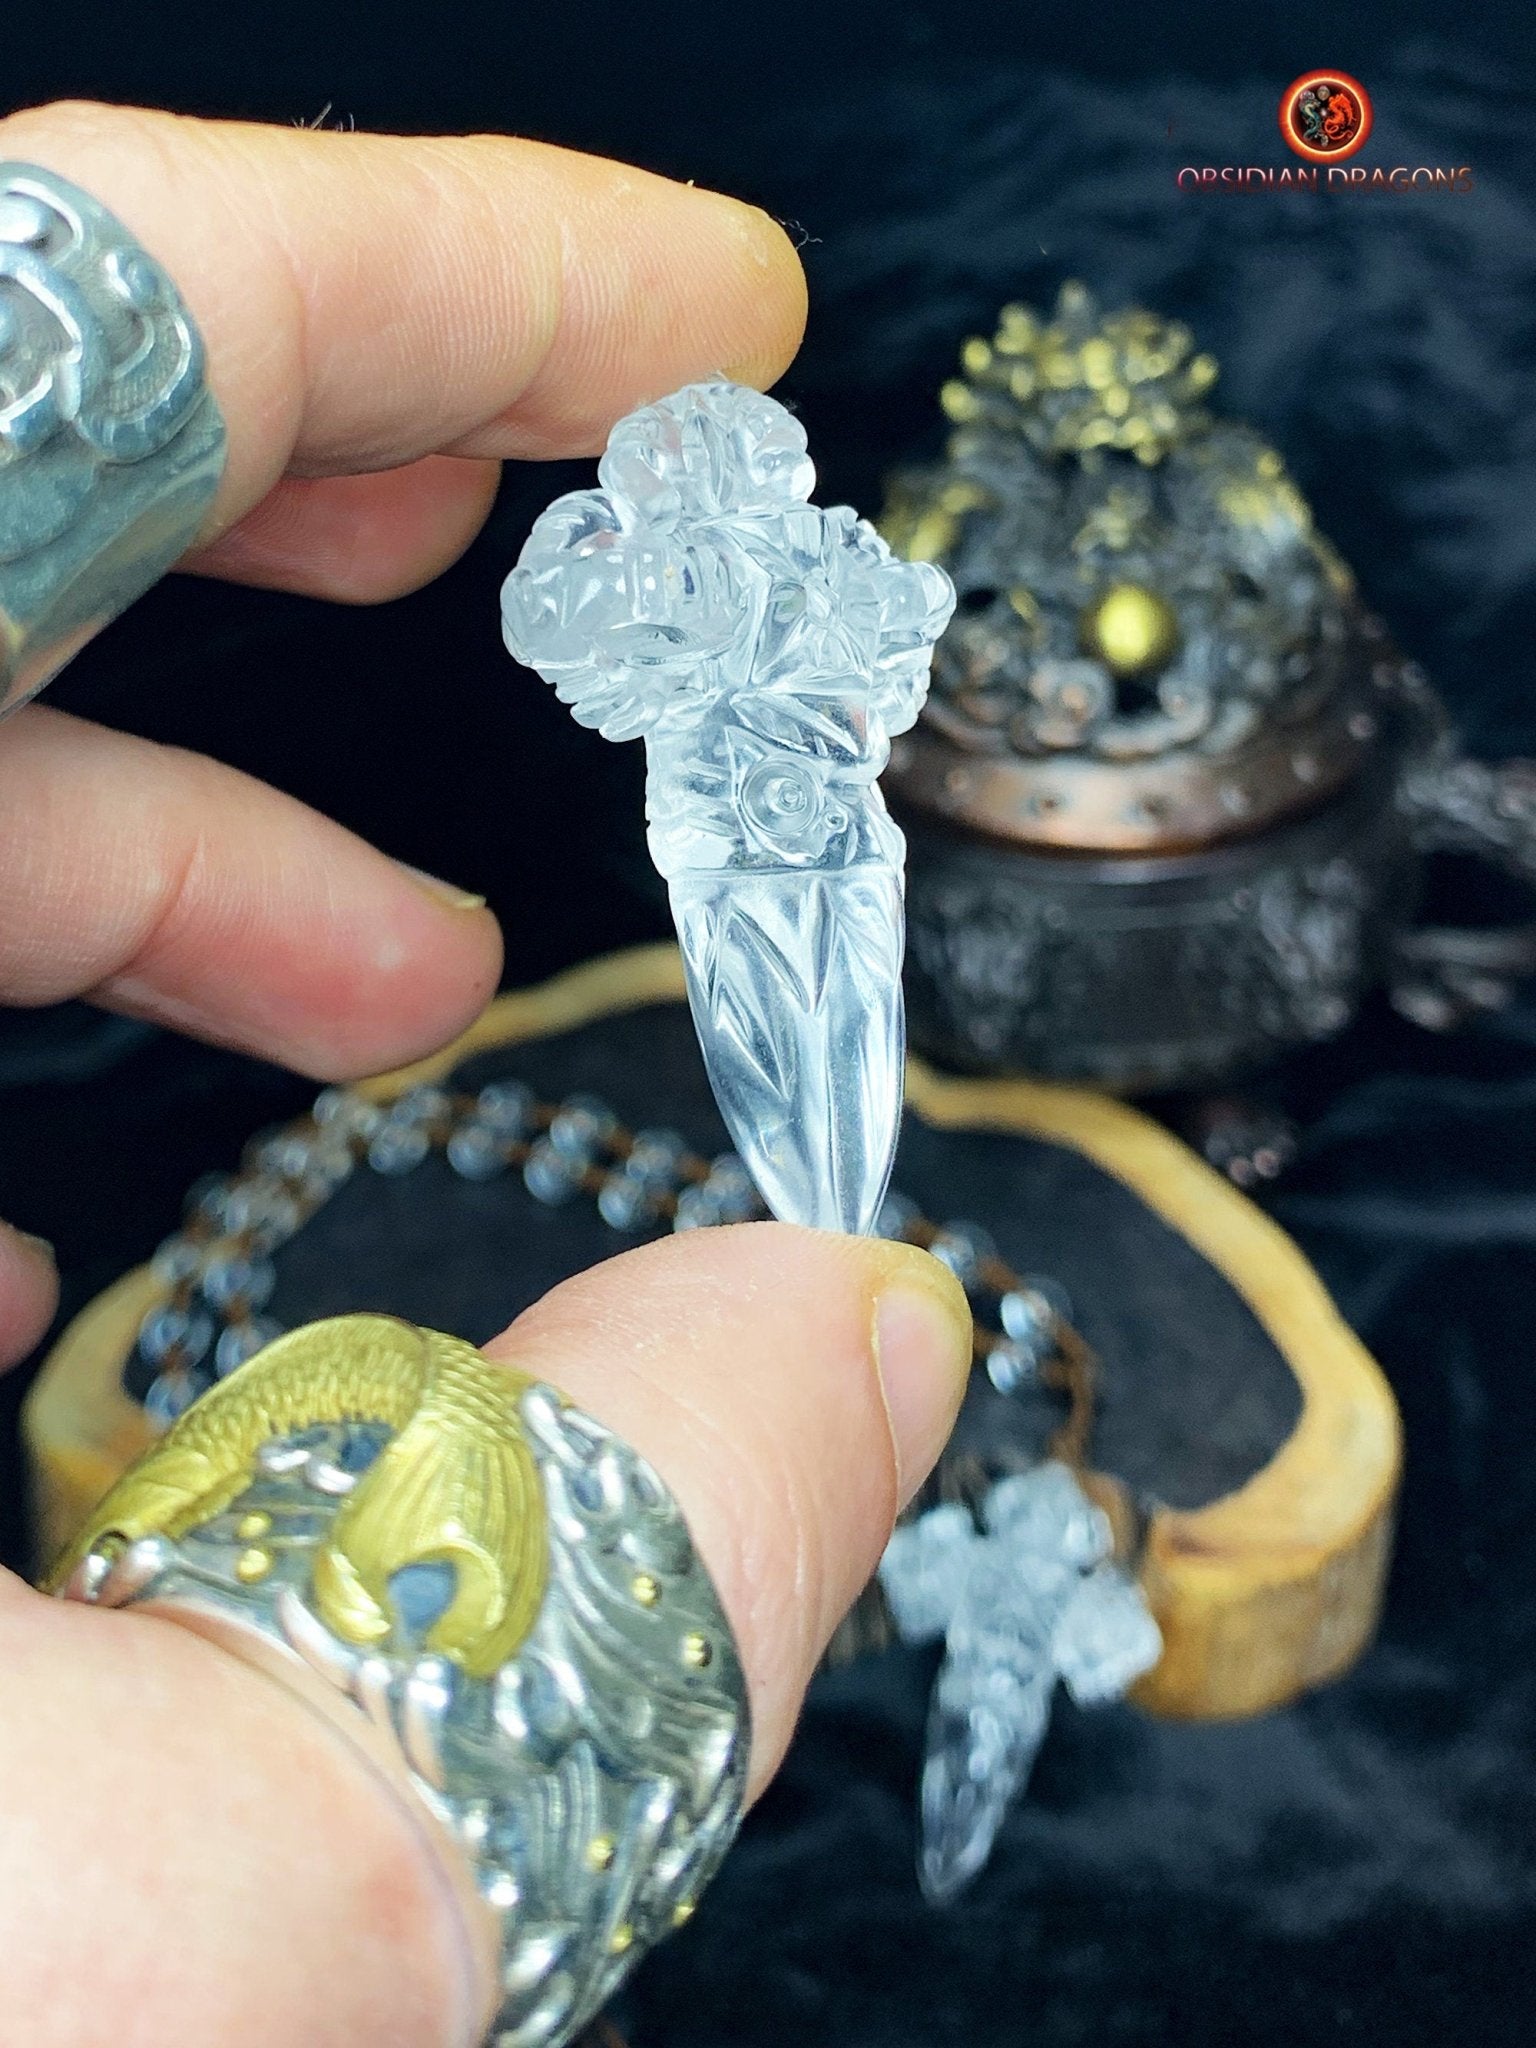 Pendentif phurba en cristal de roche- Vaincre les démons | obsidian dragons